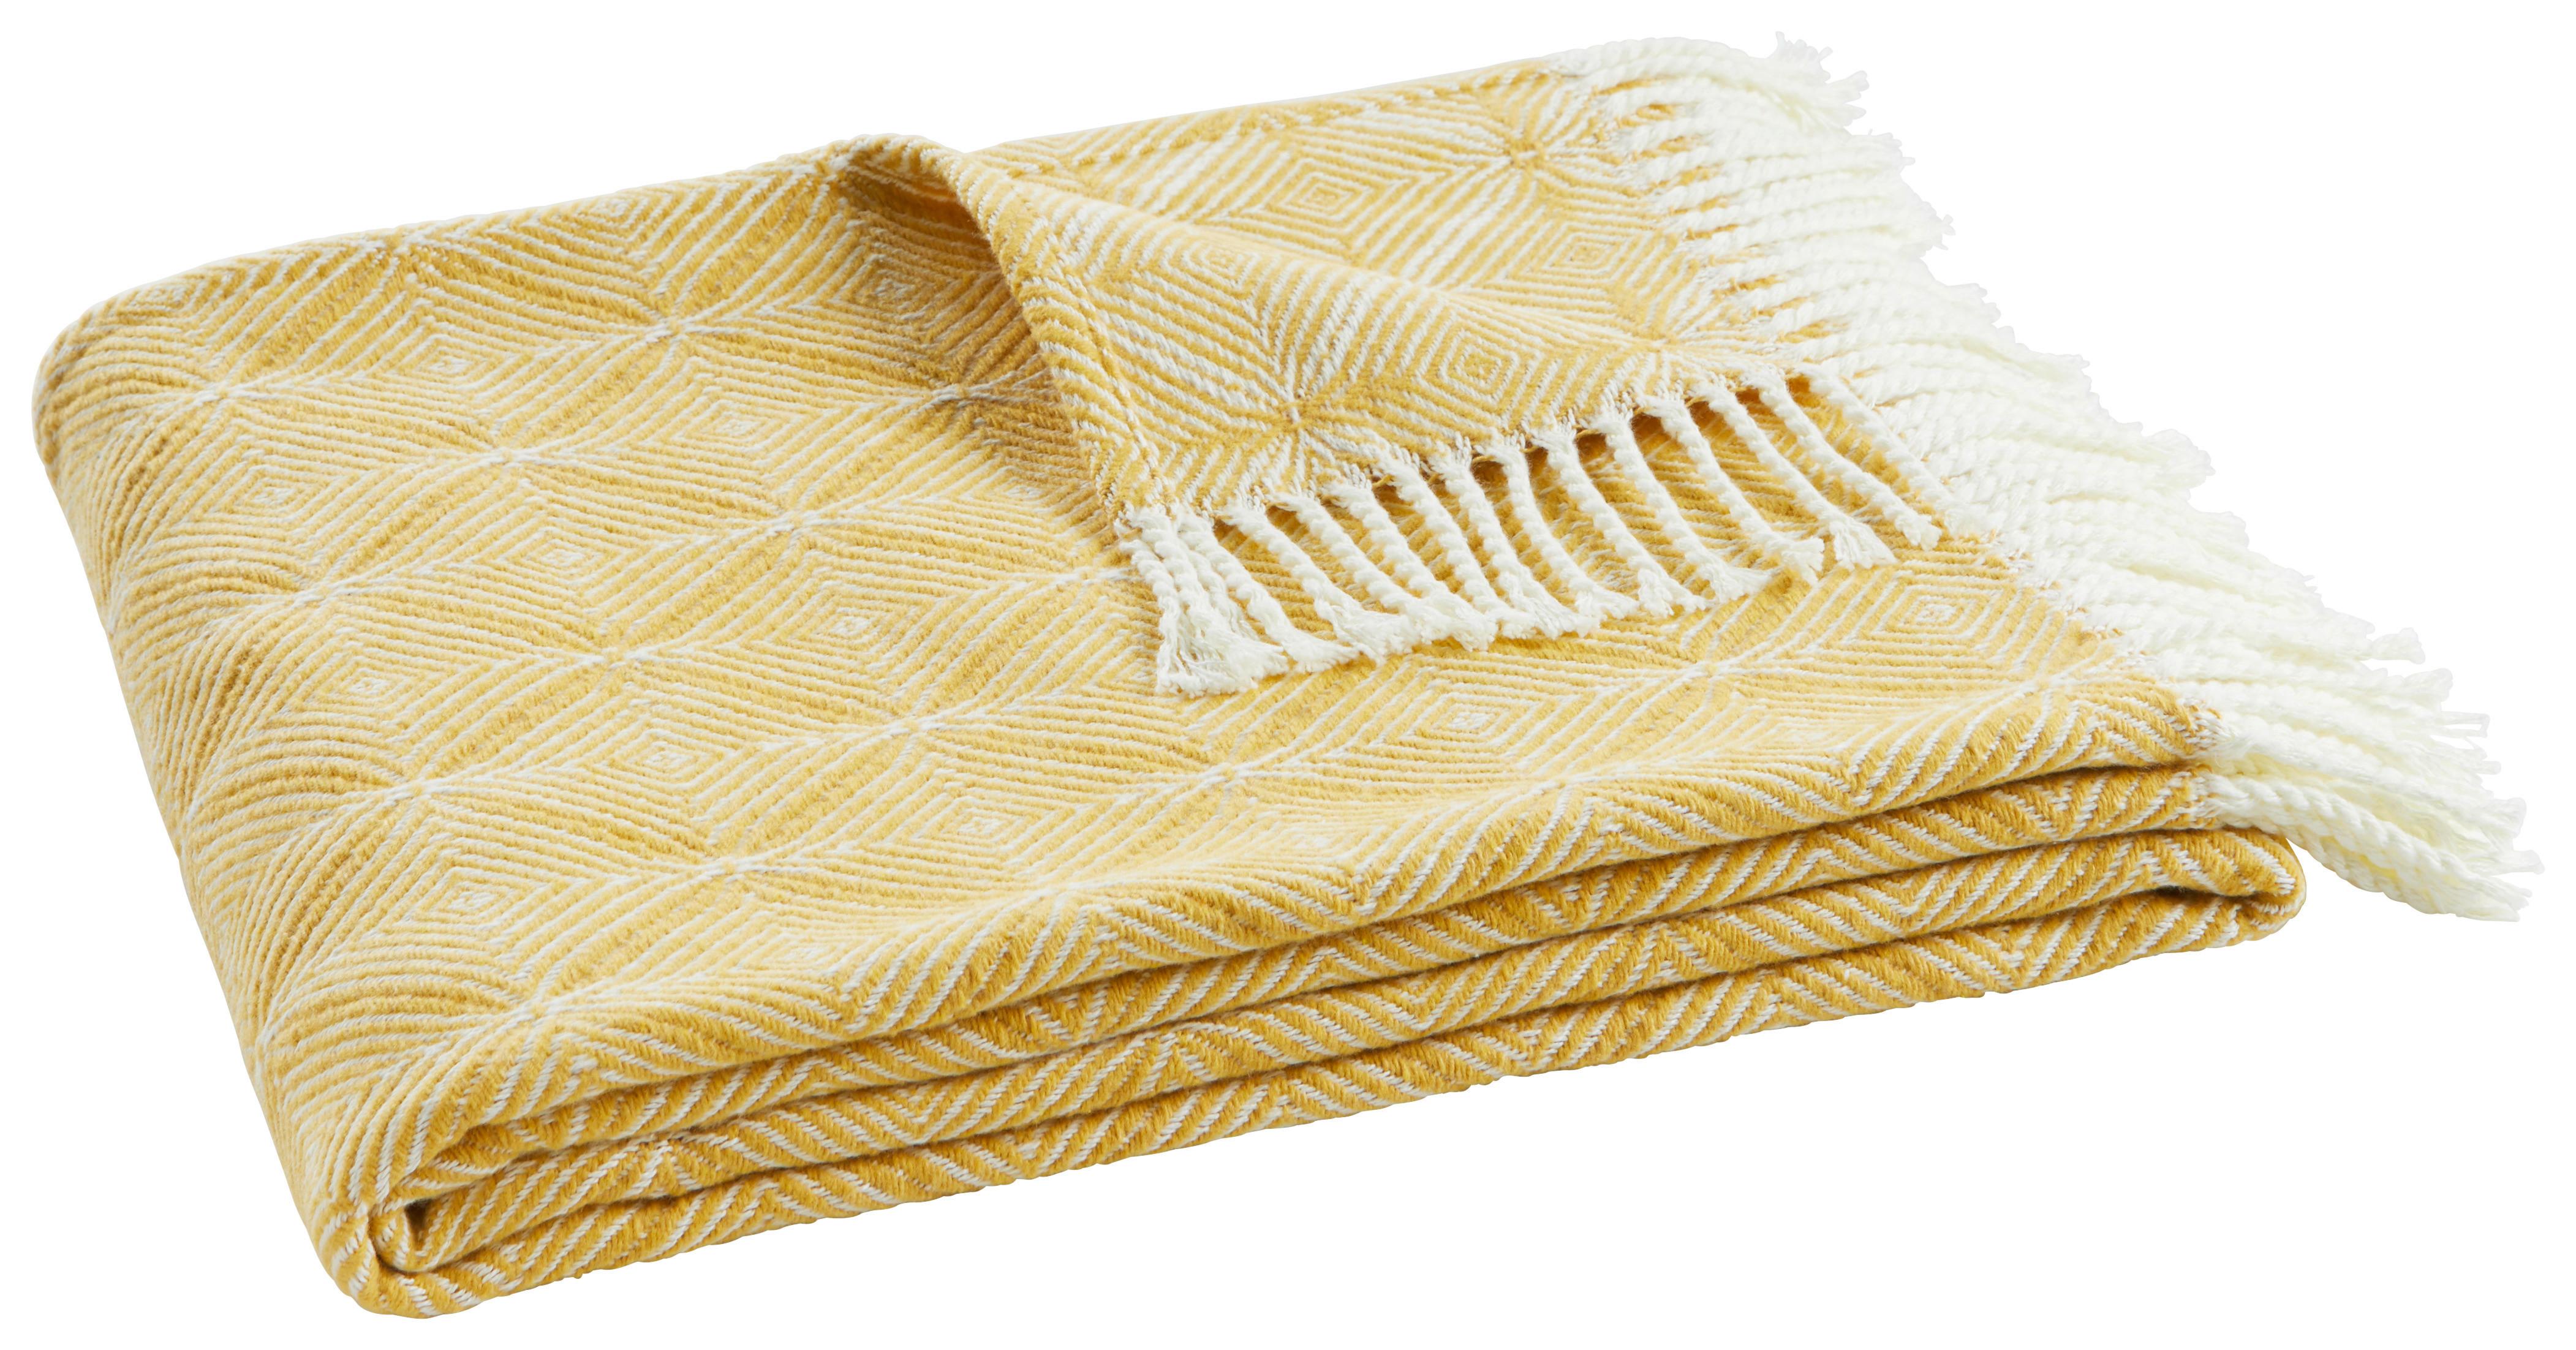 Pătură Samira - galben/culoare natur, Lifestyle, textil (130/170cm) - Modern Living